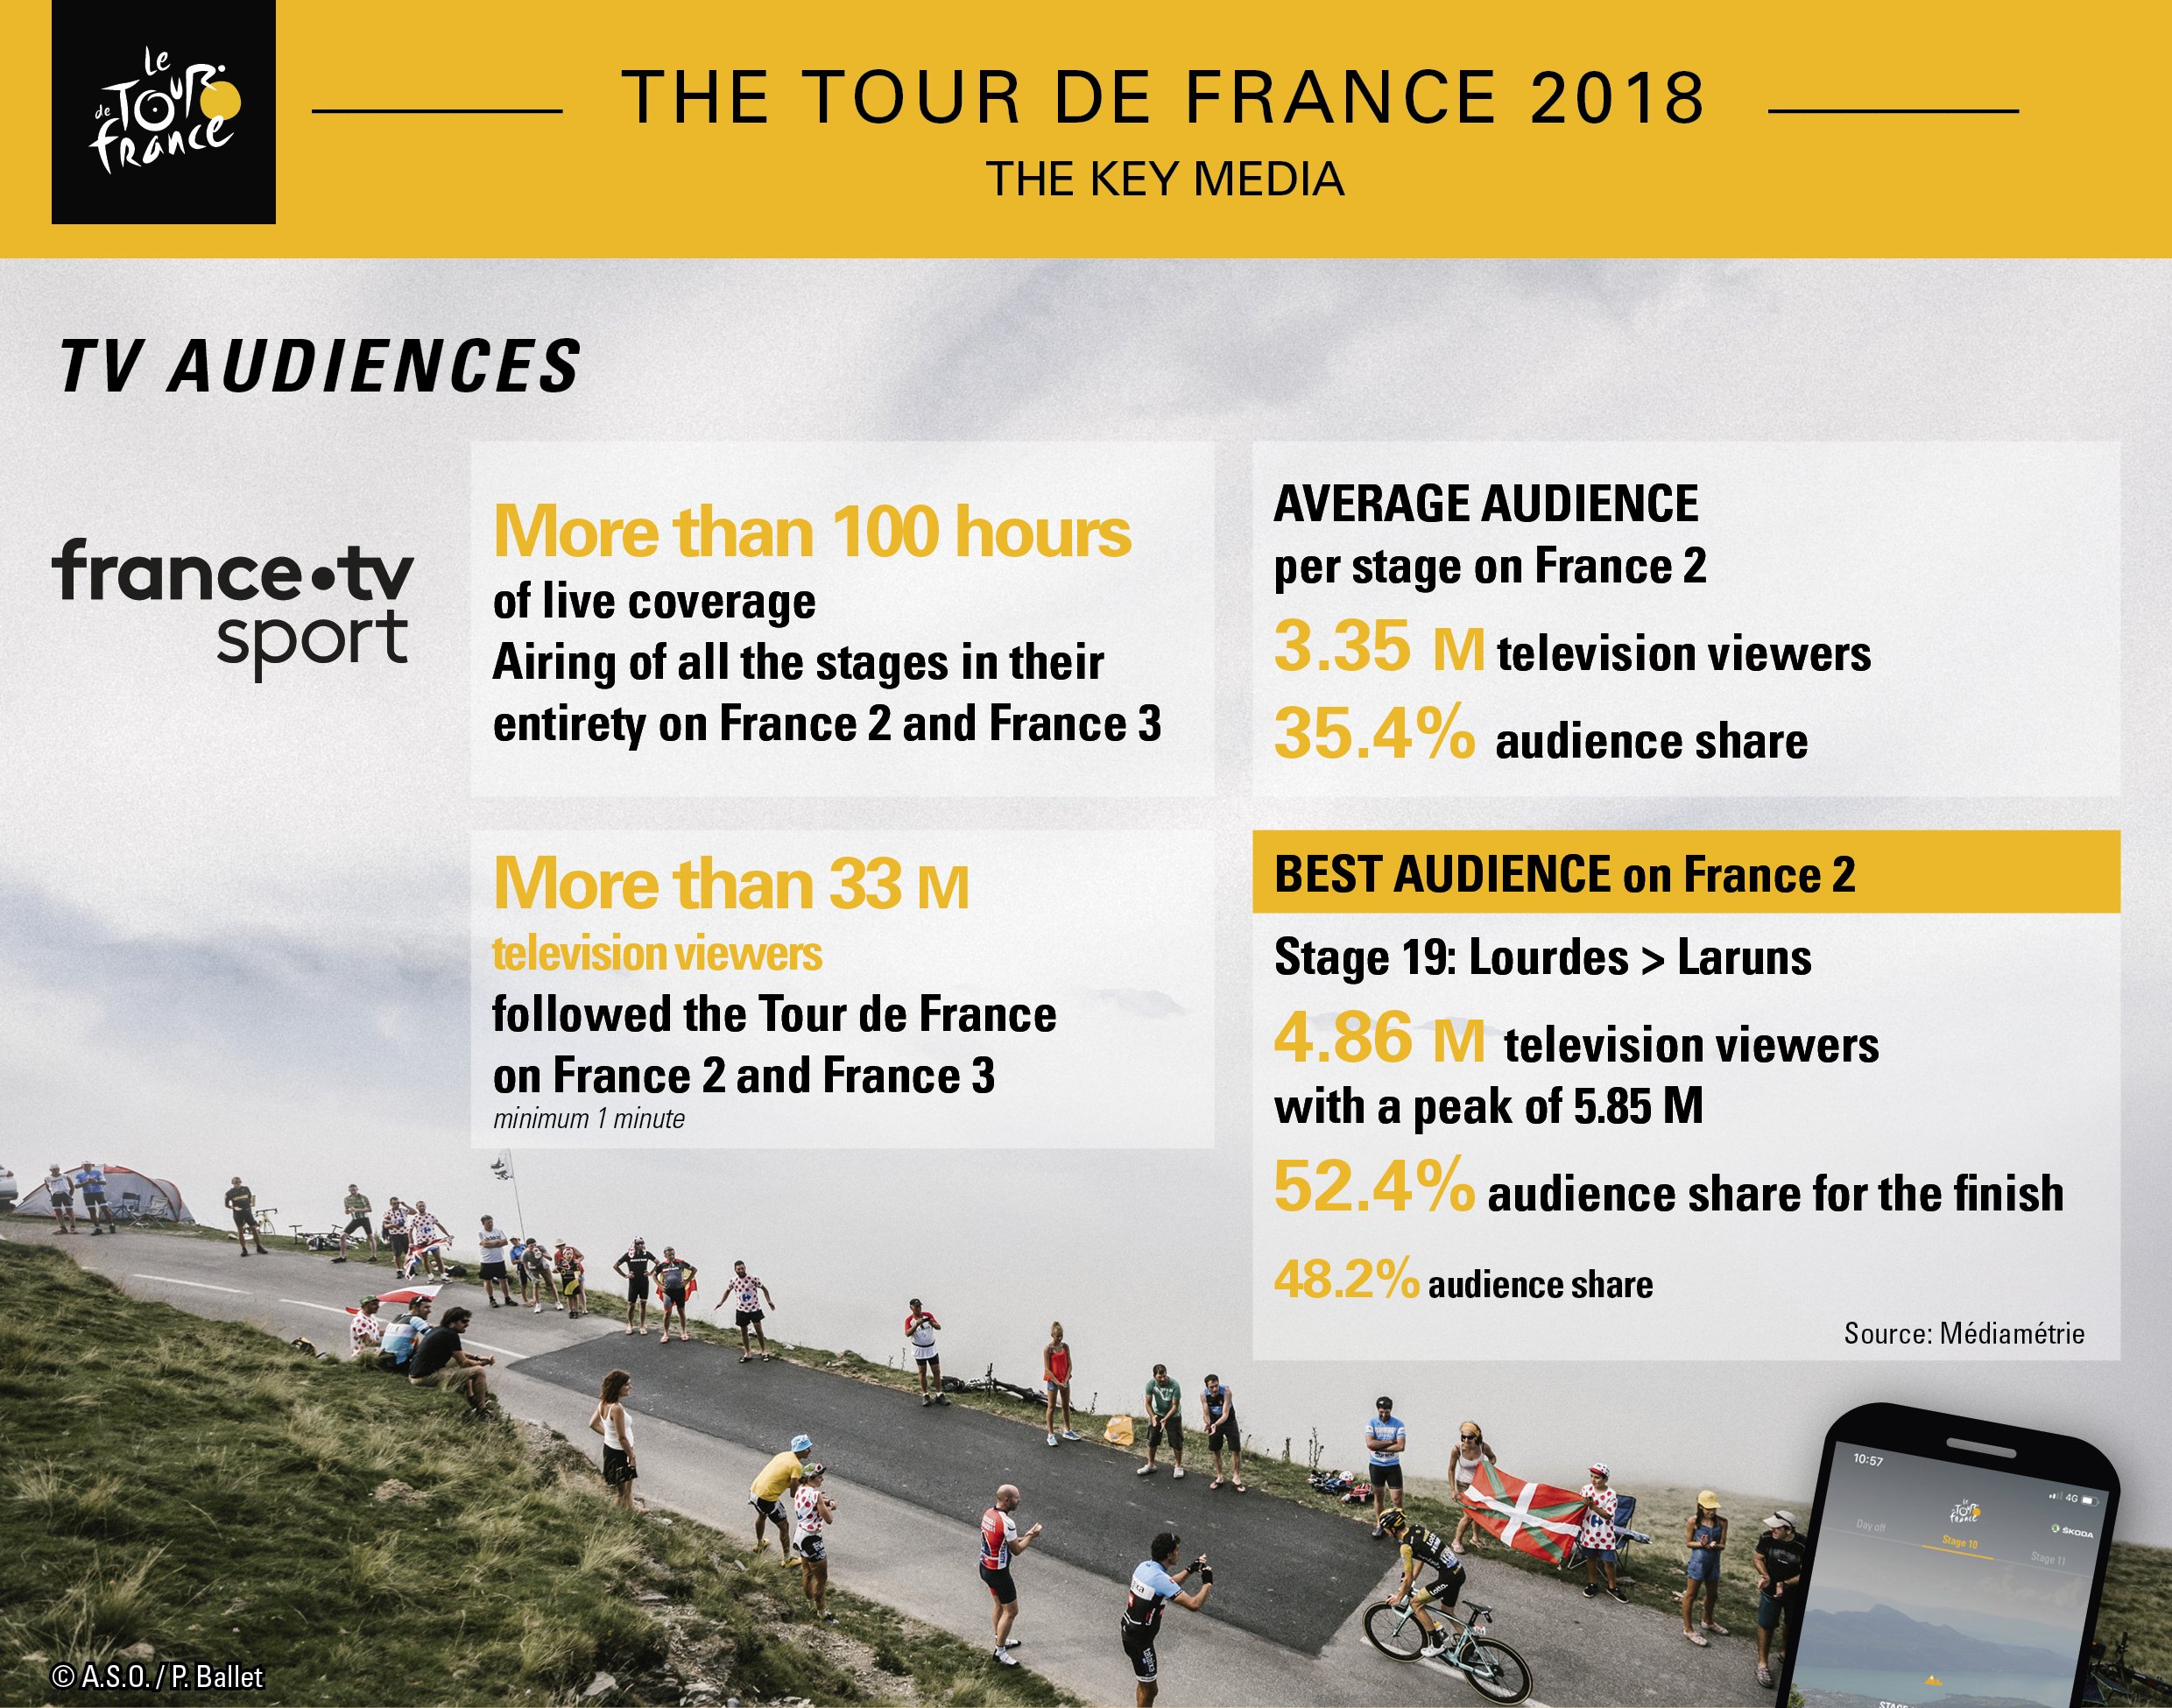 Psykologisk Lav et navn venskab Tour de France™ on Twitter: "📊 2018 Tour de France media figures ⬇  #TDF2018 https://t.co/LWiAiAc2qf" / Twitter